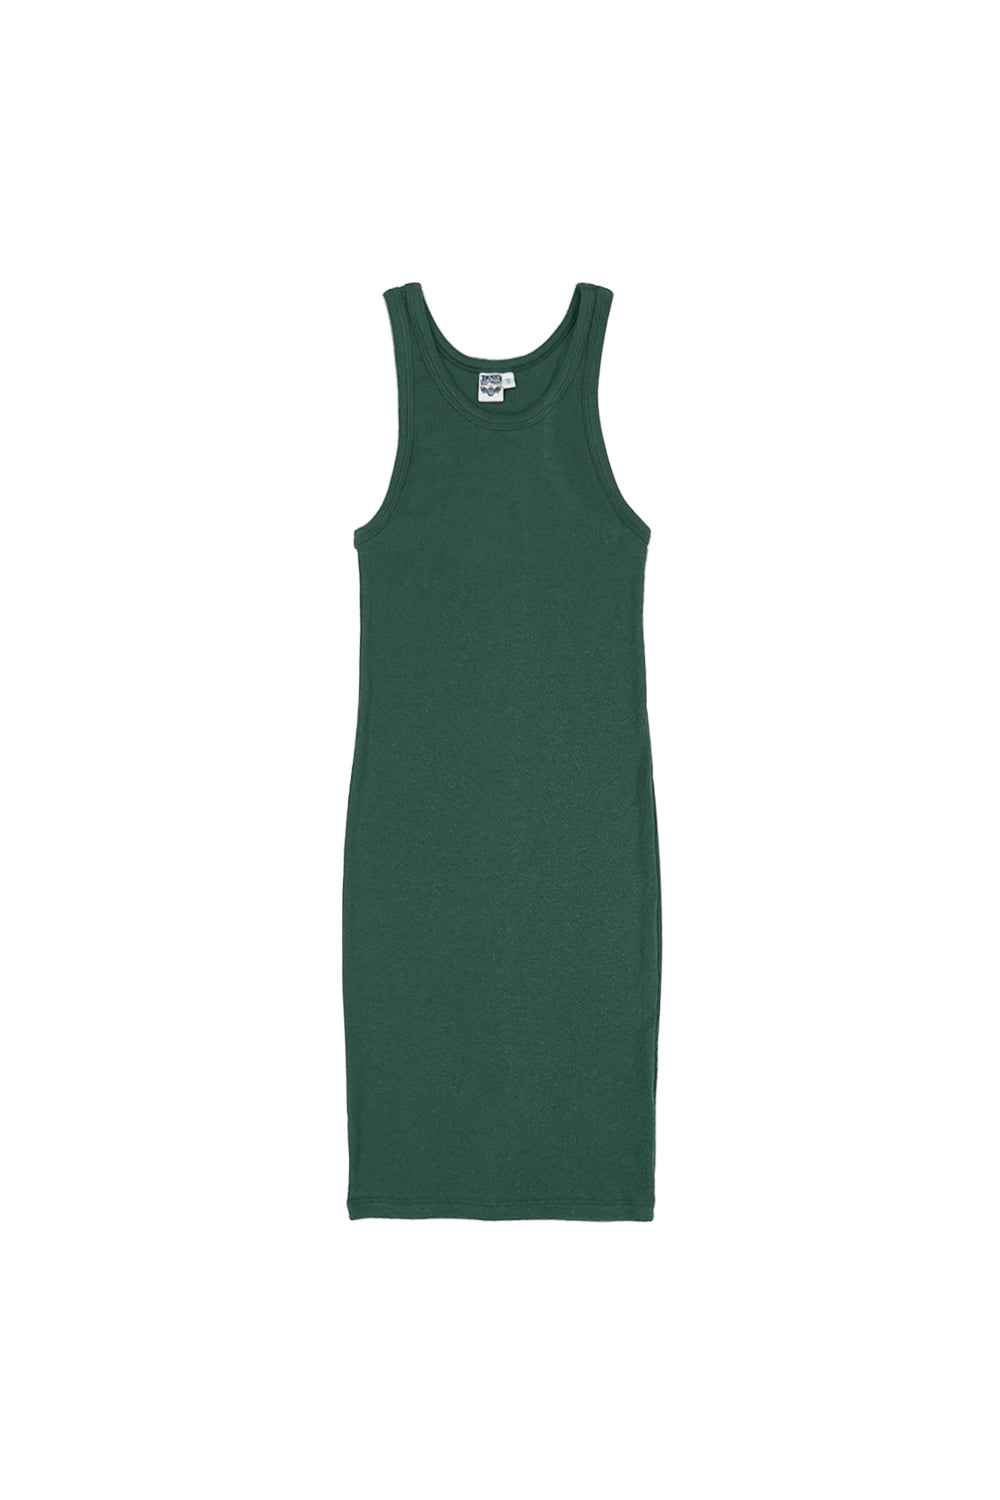 Daphne Dress | Jungmaven Hemp Clothing & Accessories / Color: Hunter Green